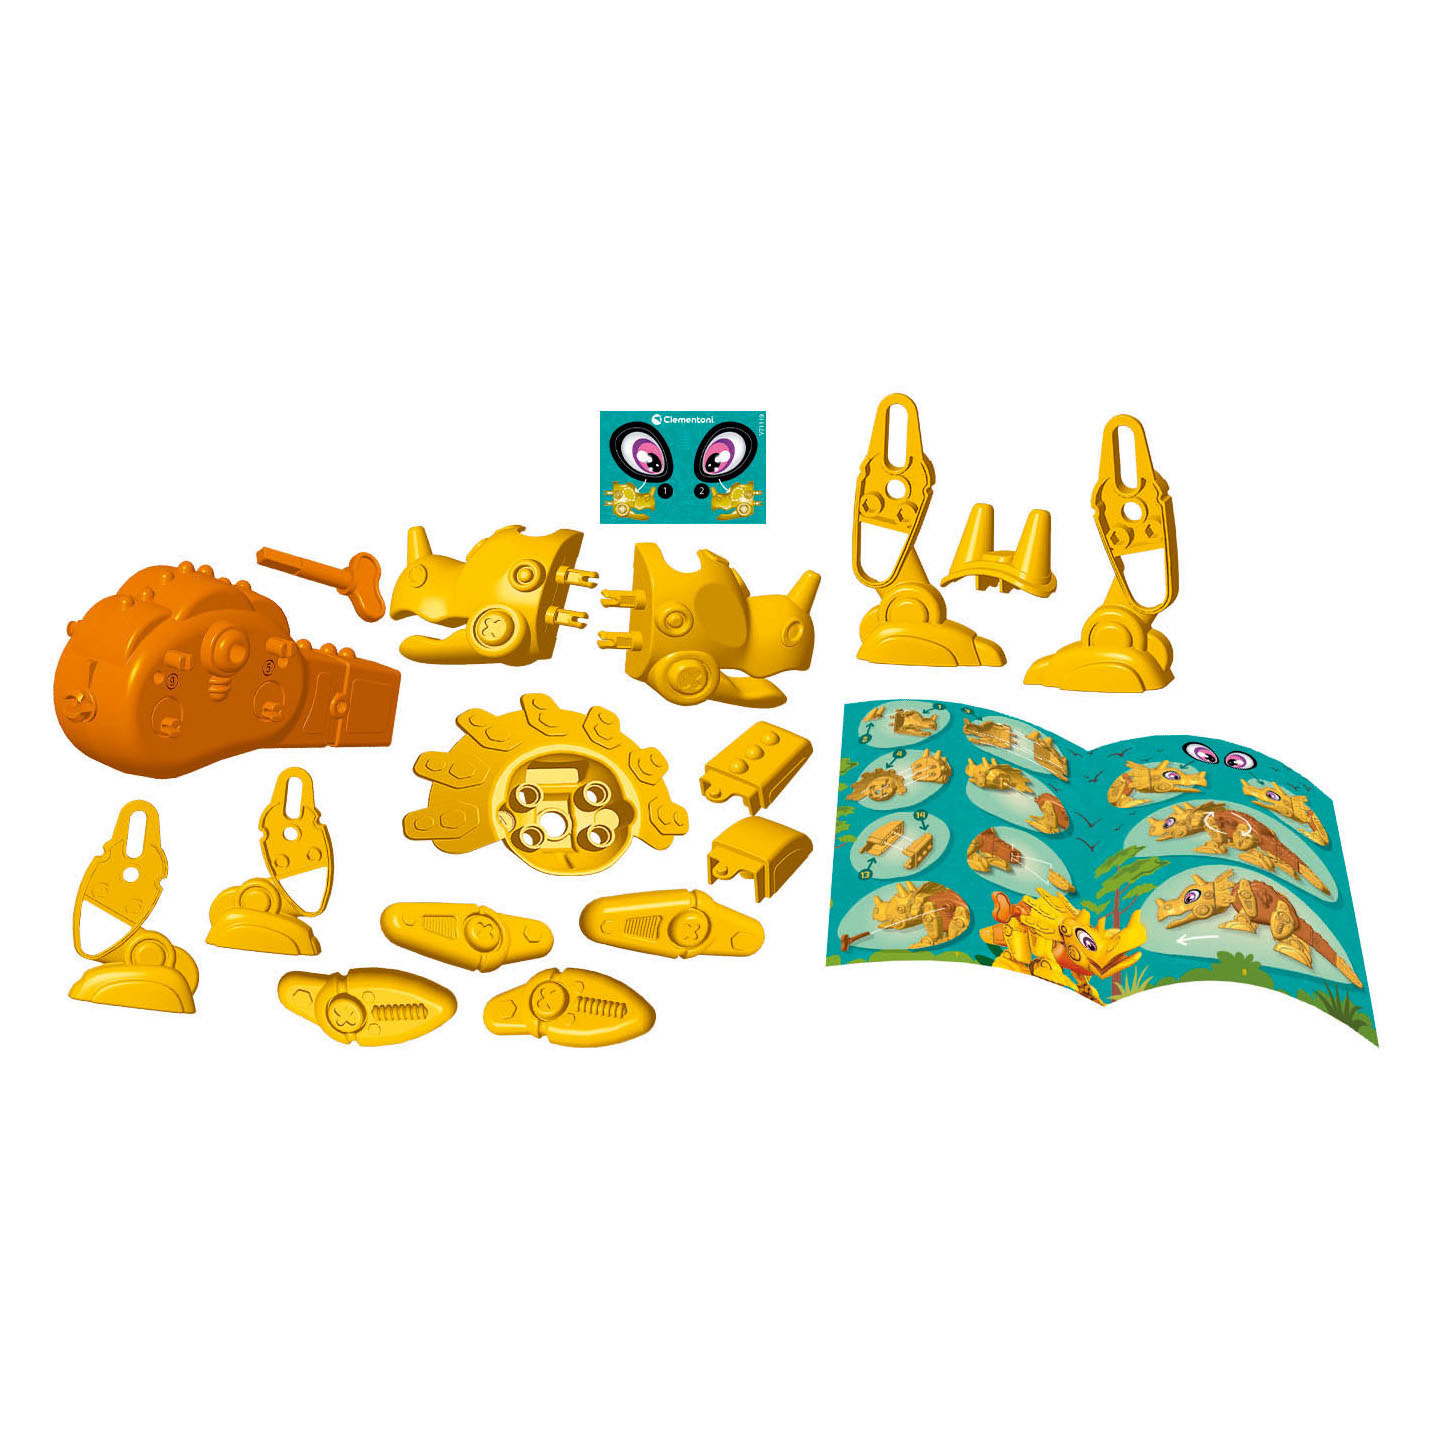 Clementoni Science & Games Junior – Dino Bot Triceratops